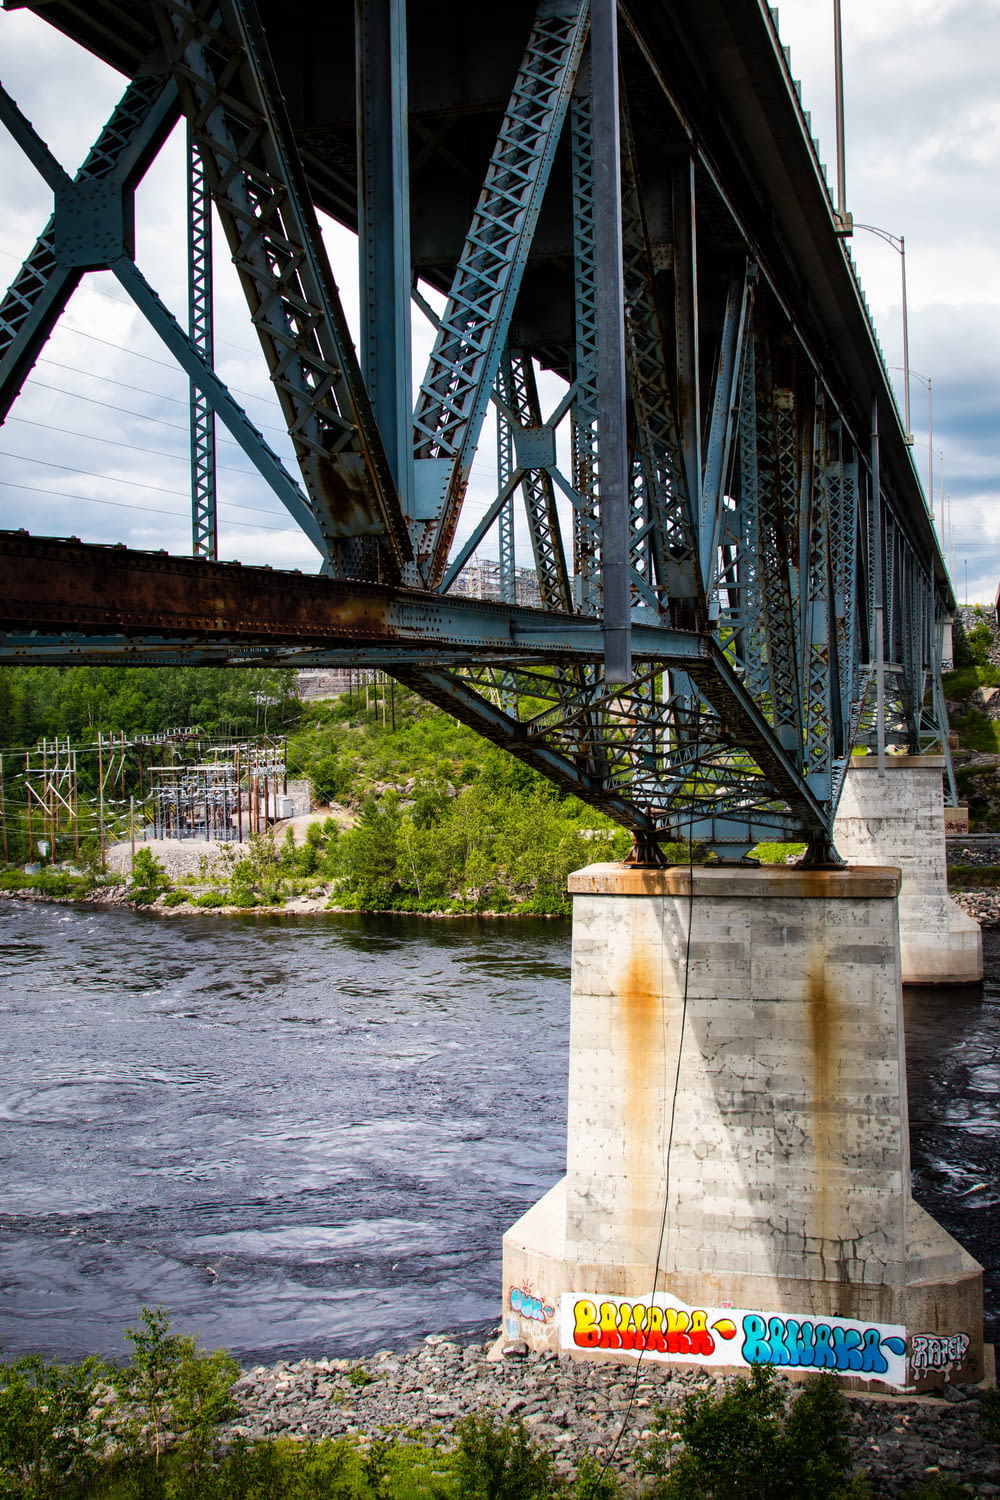 a bridge over a river with graffiti on it